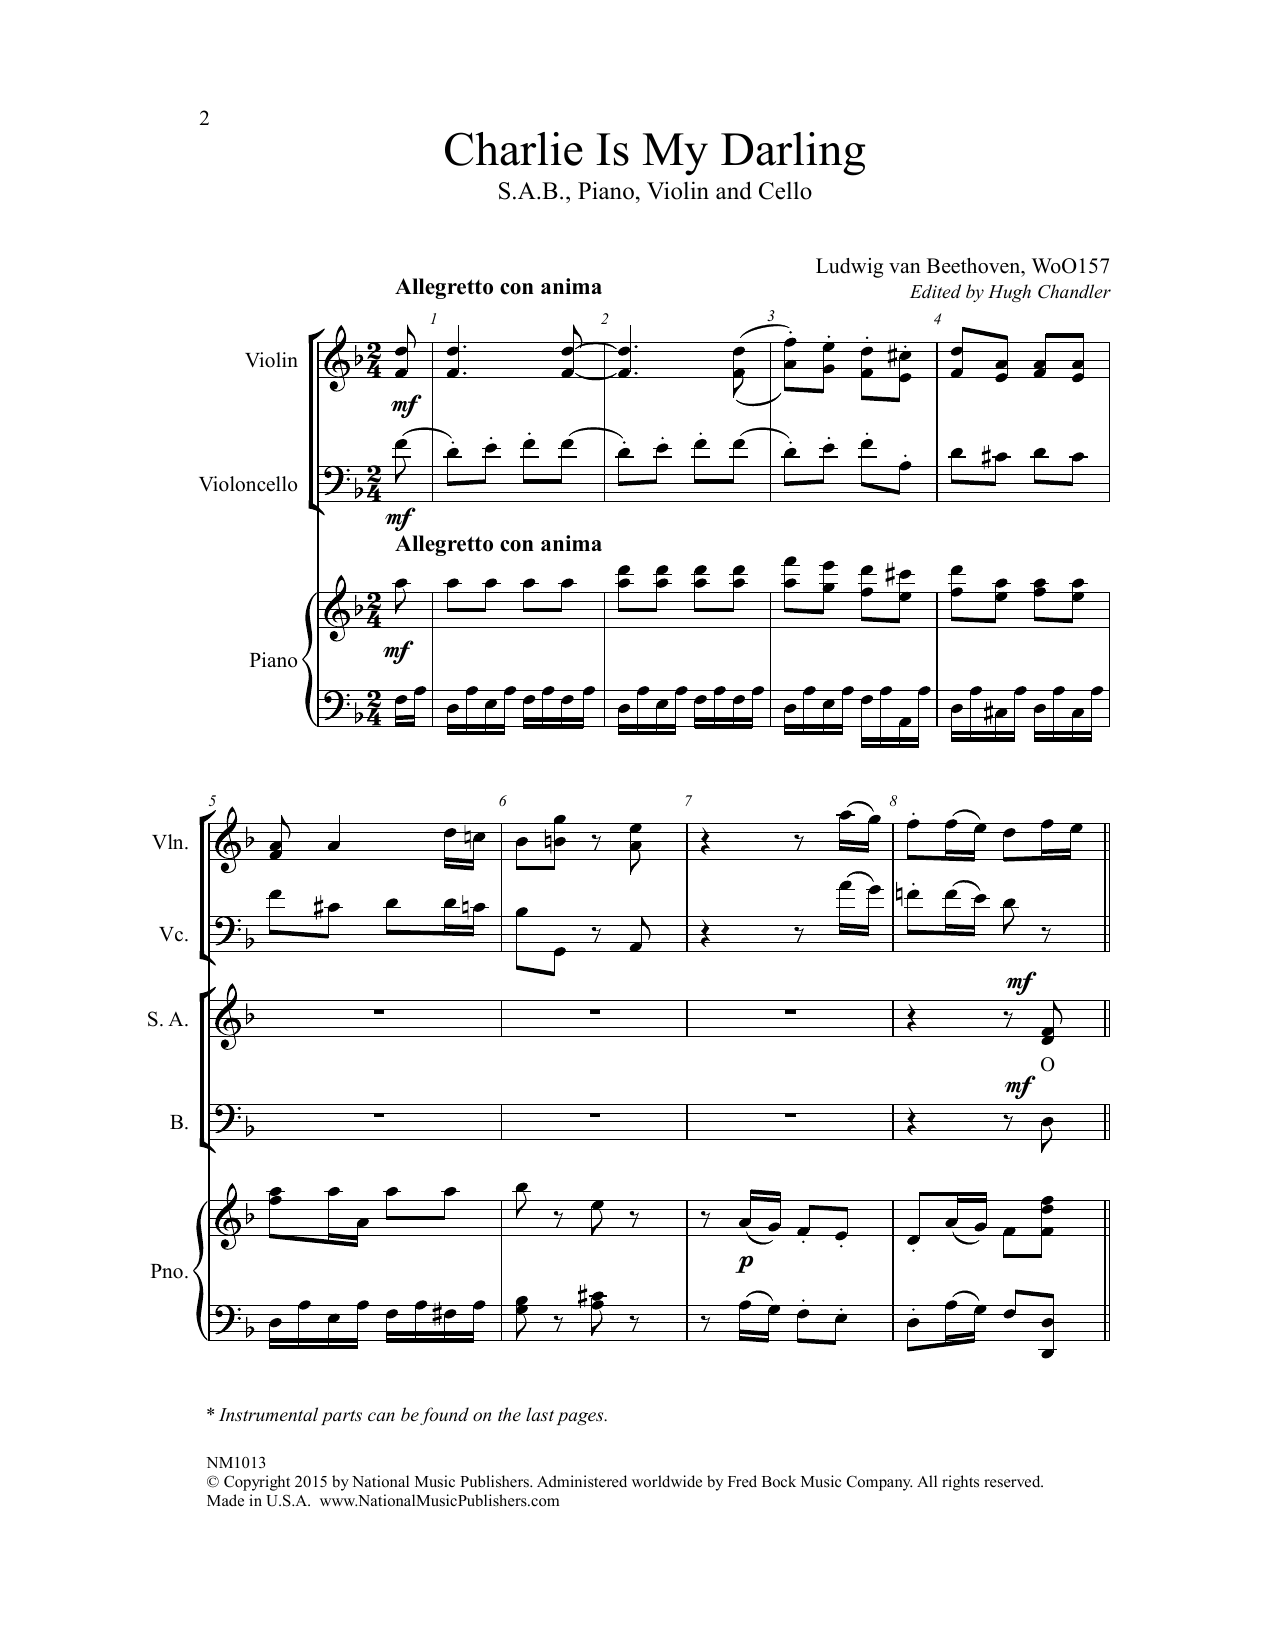 Ludwig van Beethoven Charlie Is My Darling (ed. Hugh Chandler) Sheet Music Notes & Chords for SAB Choir - Download or Print PDF